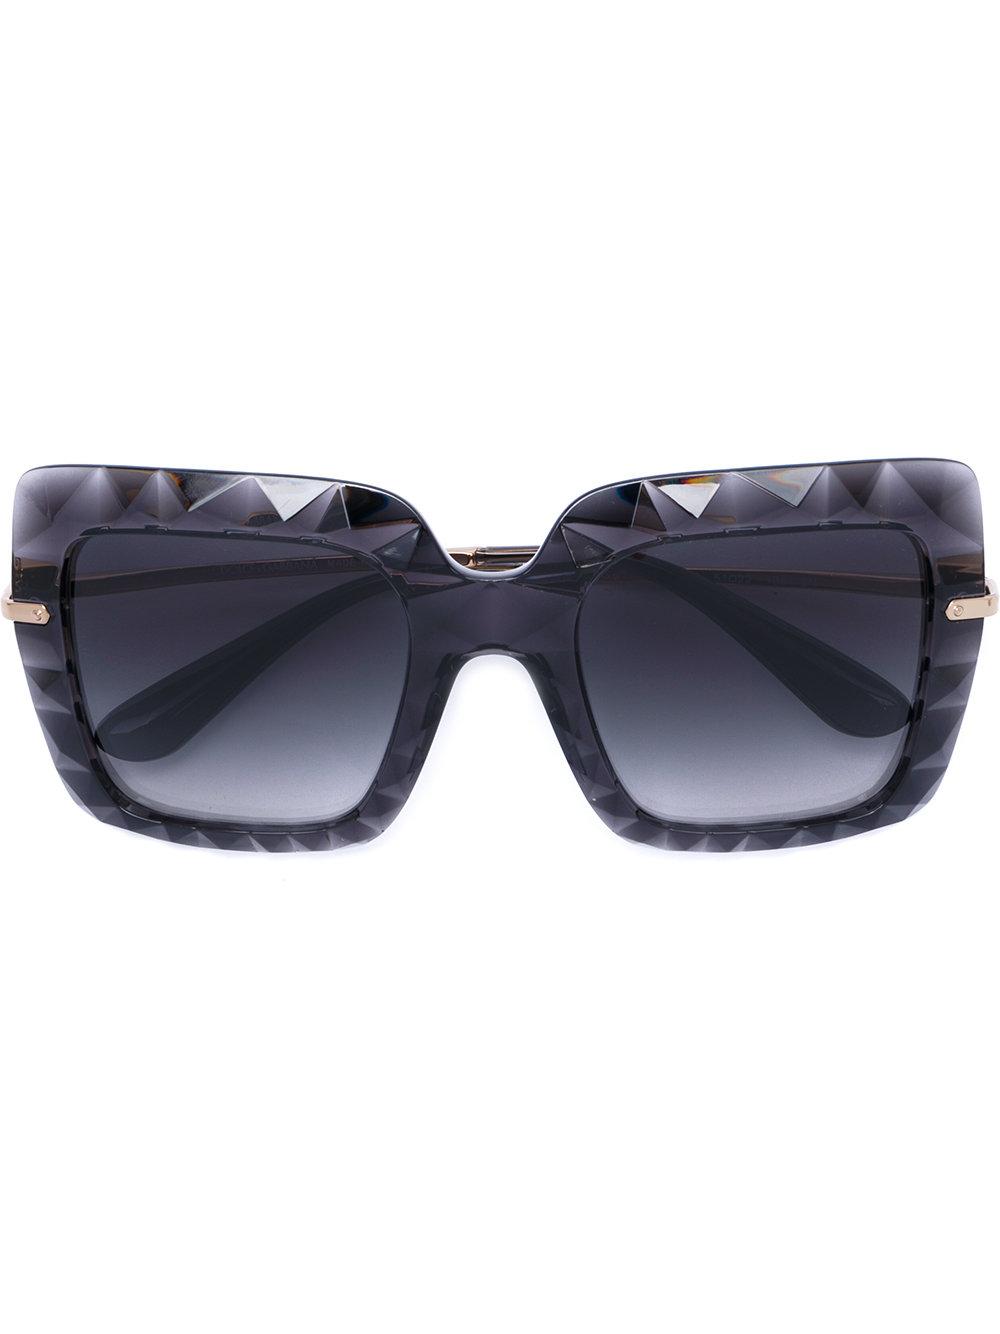 Dolce & gabbana Geometric Frame Square Sunglasses in Grey | Lyst